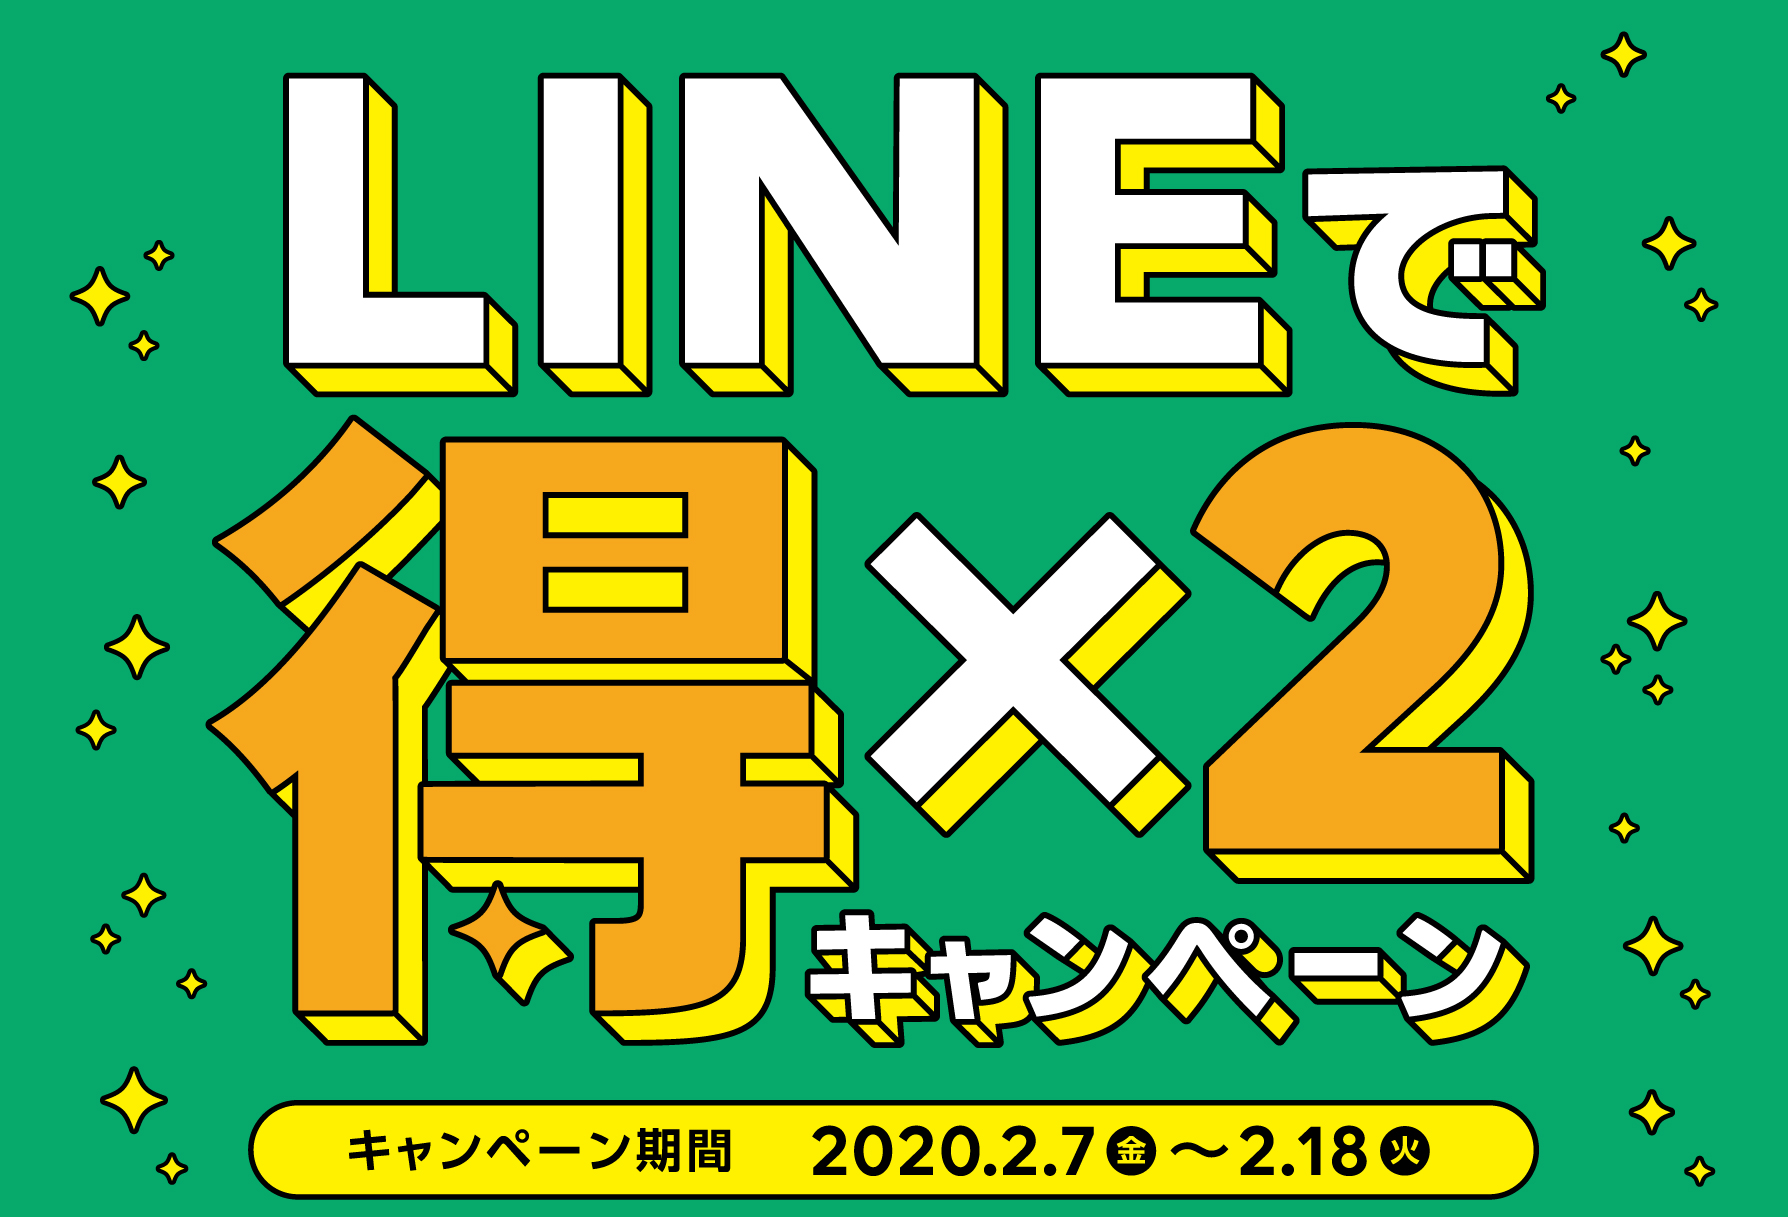 Line公式アカウントの友だち追加で10 オフ ライトオン Line トクトクキャンペーン が2月7日 金 よりスタート 株式会社ライトオン のプレスリリース